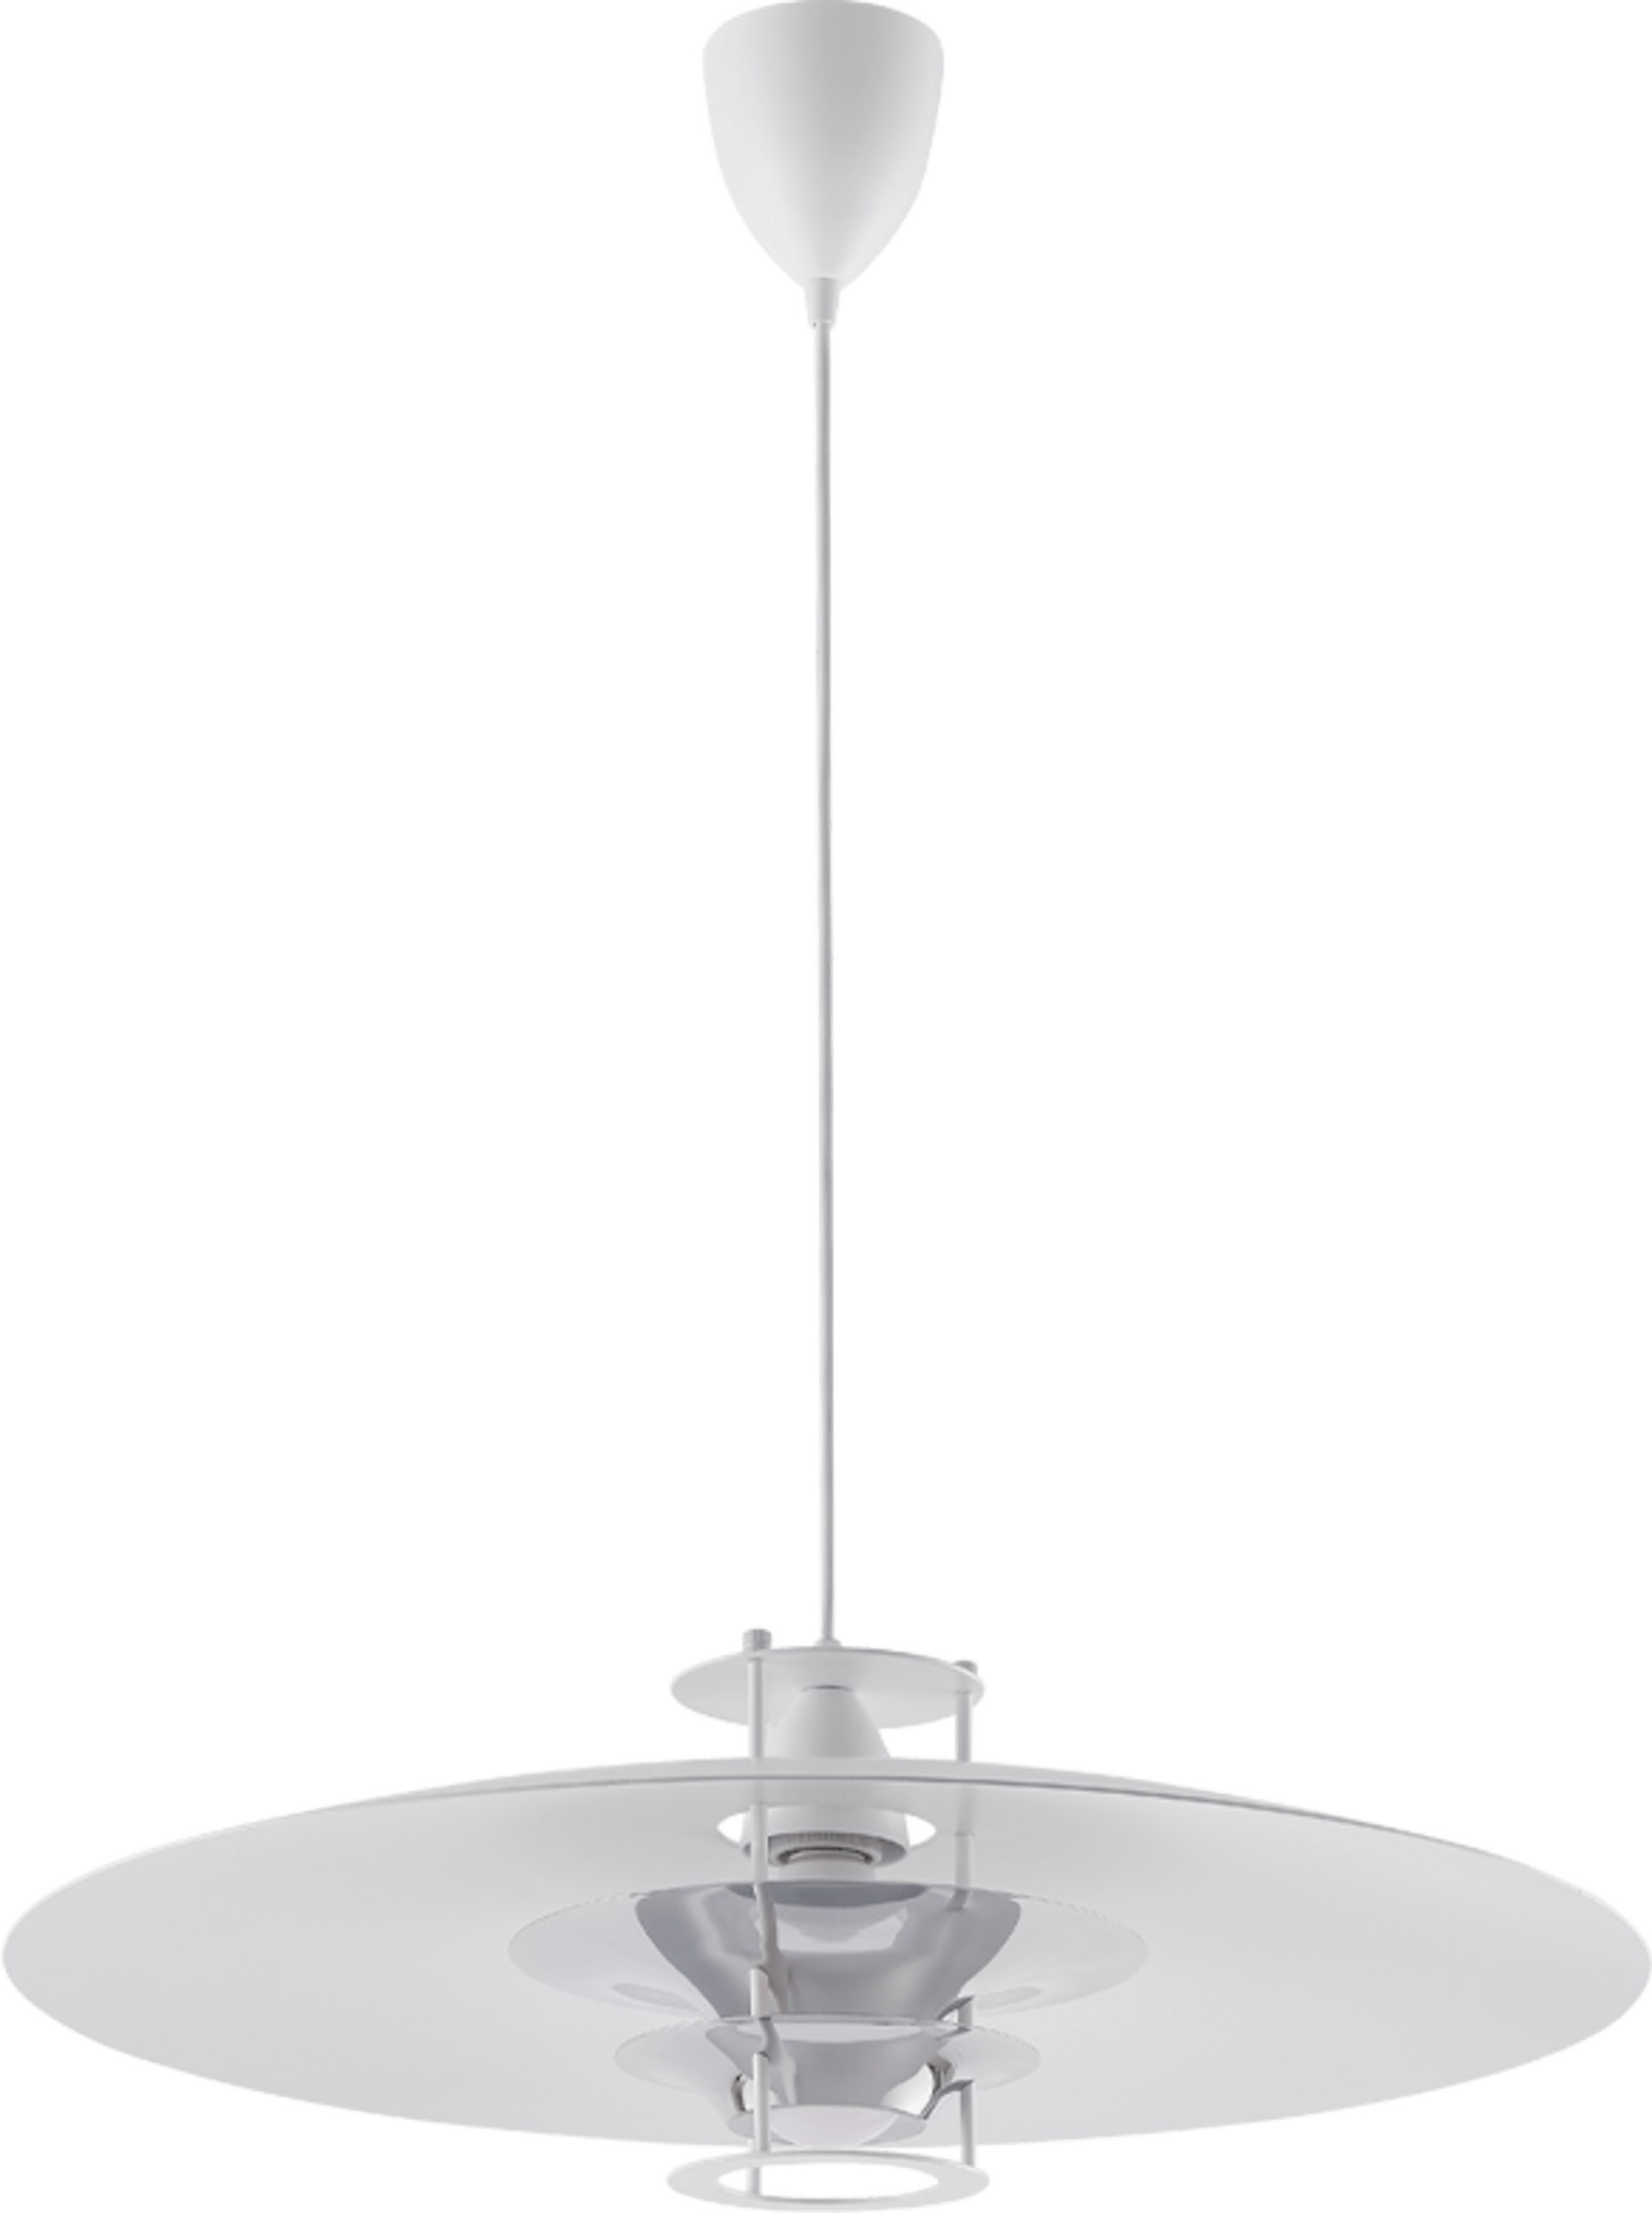 Spider Ceiling Lamp 3 Still Arms | Designer Editions